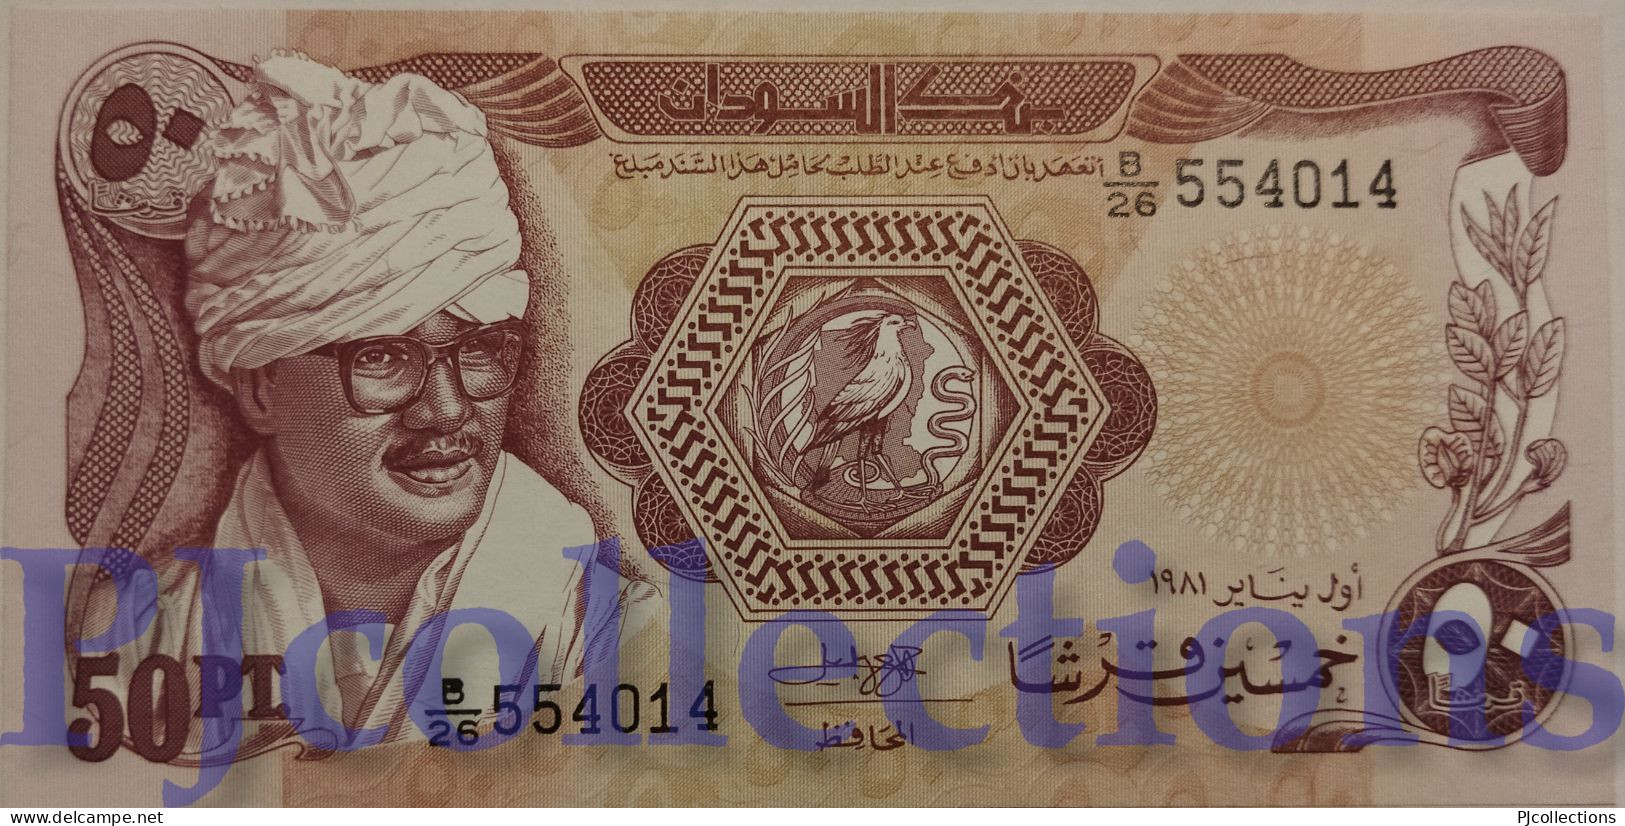 SUDAN 50 PIASTRES 1981 PICK 17 UNC - Soudan